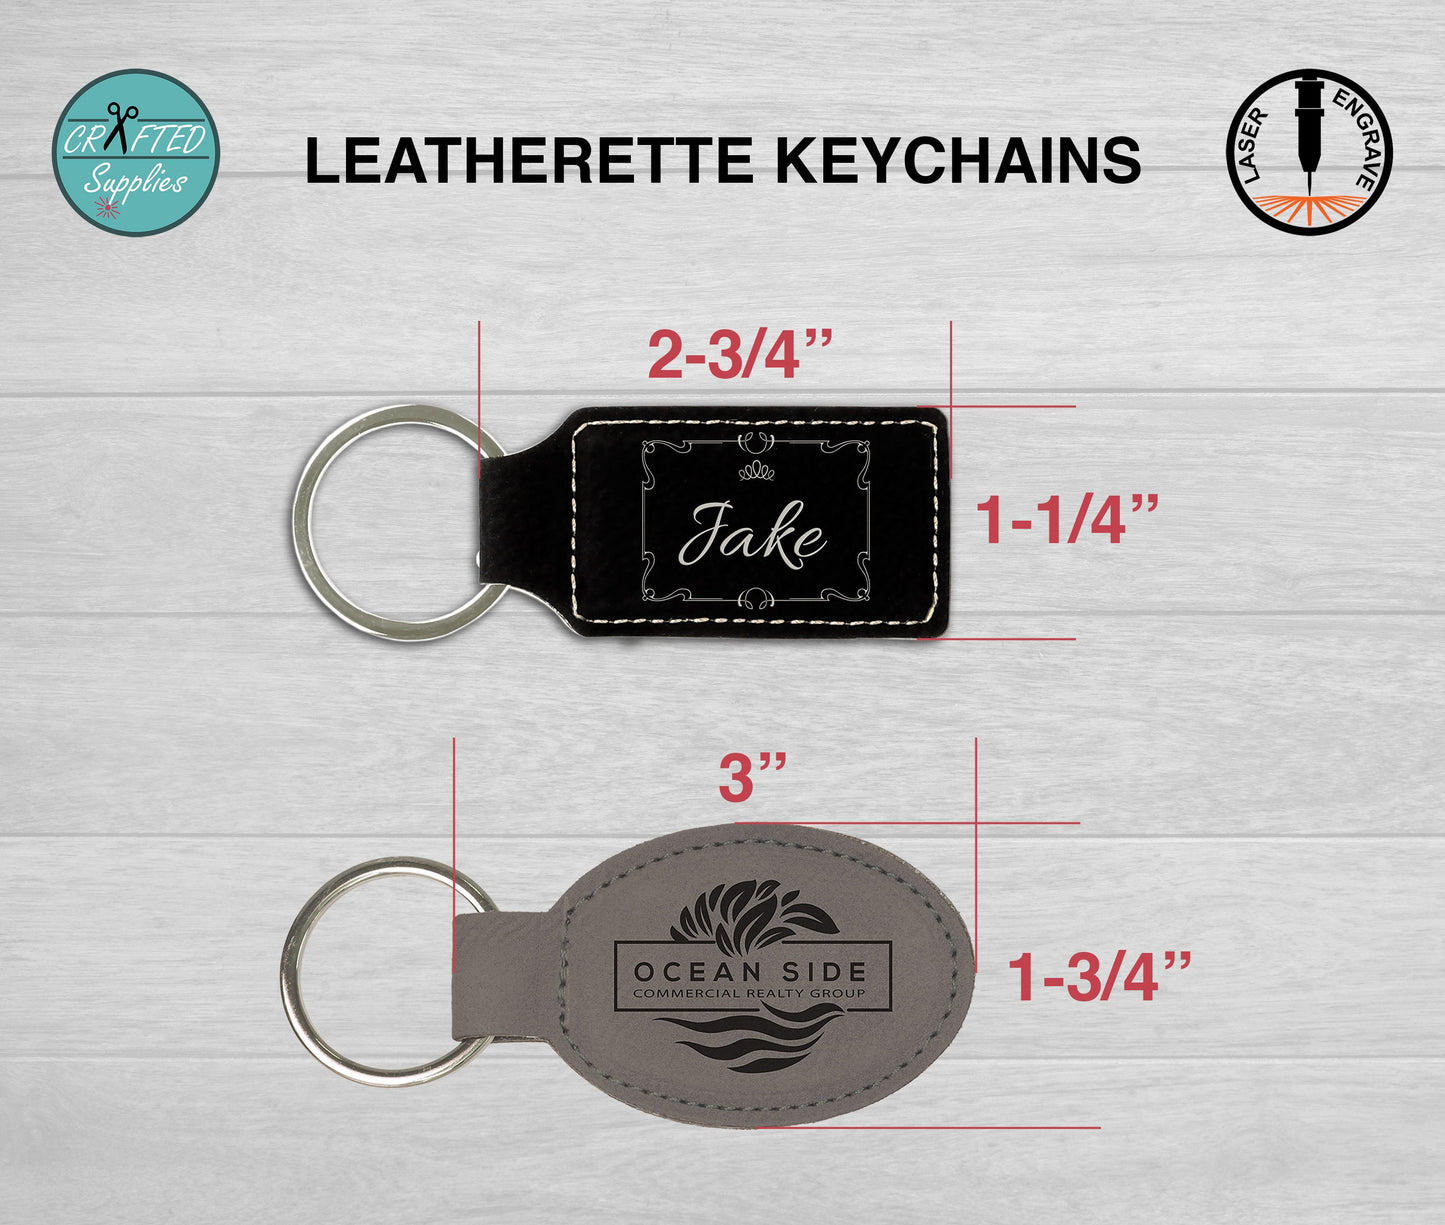 Leatherette Keychain, Glowforge Laser Supplies